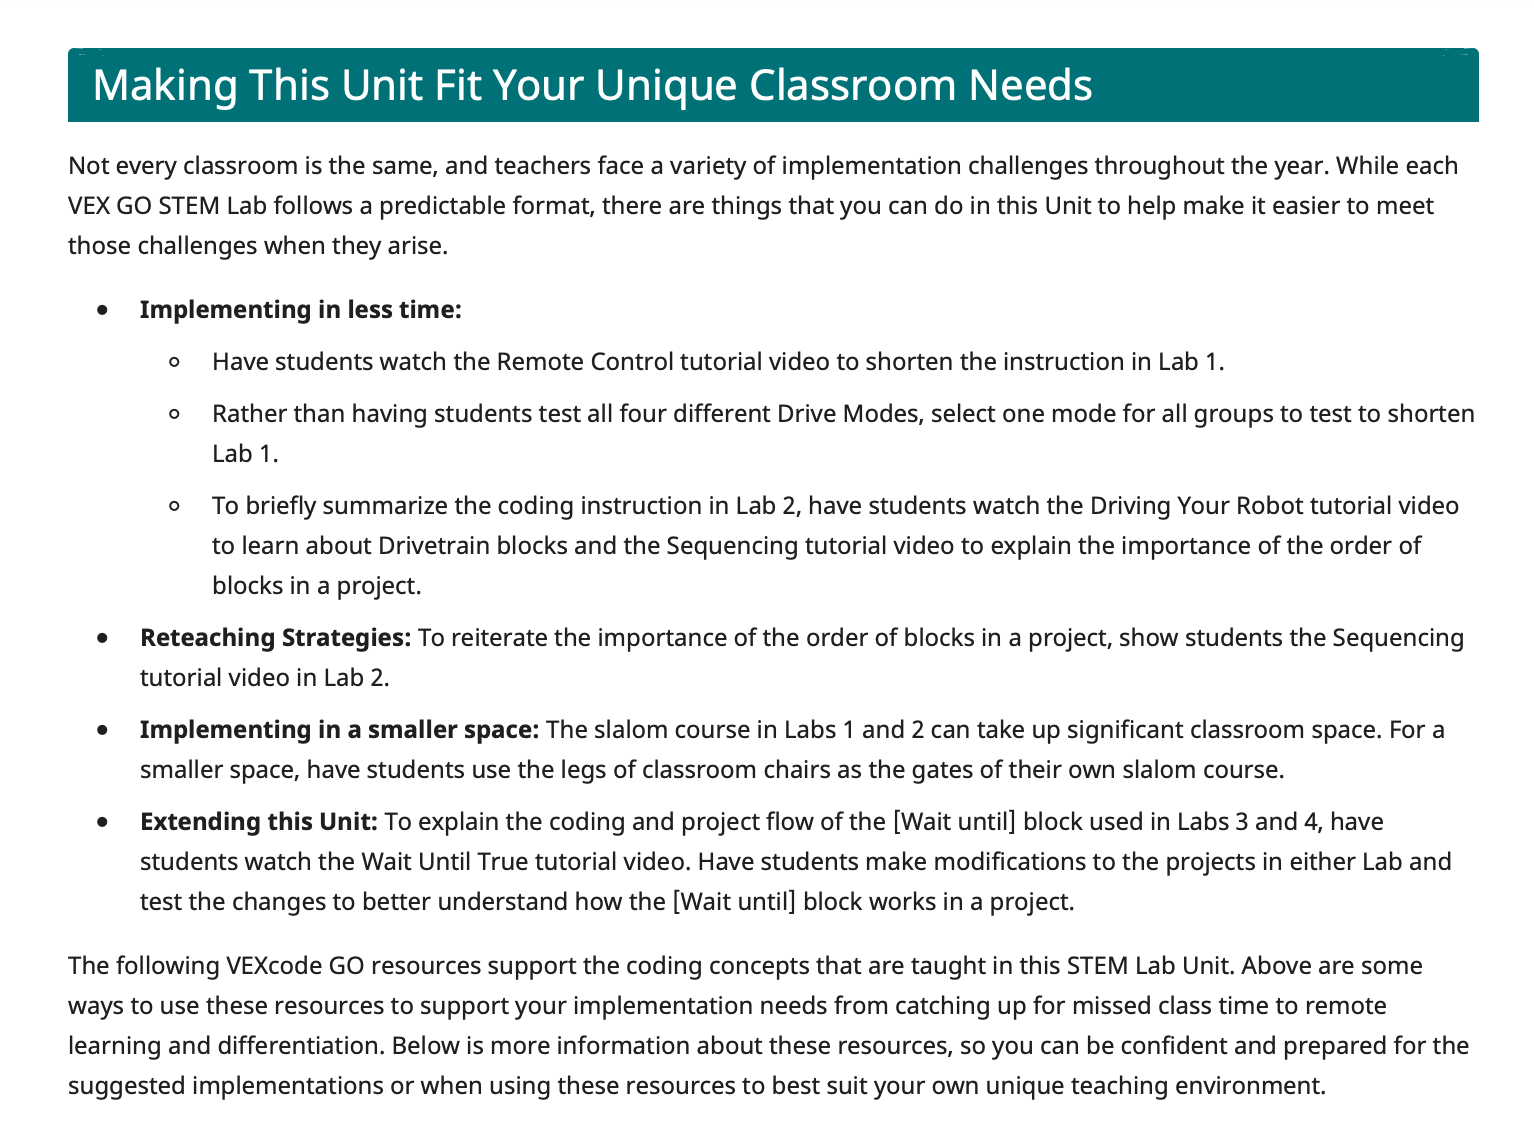 fit_your_unique_classroom_needs.png